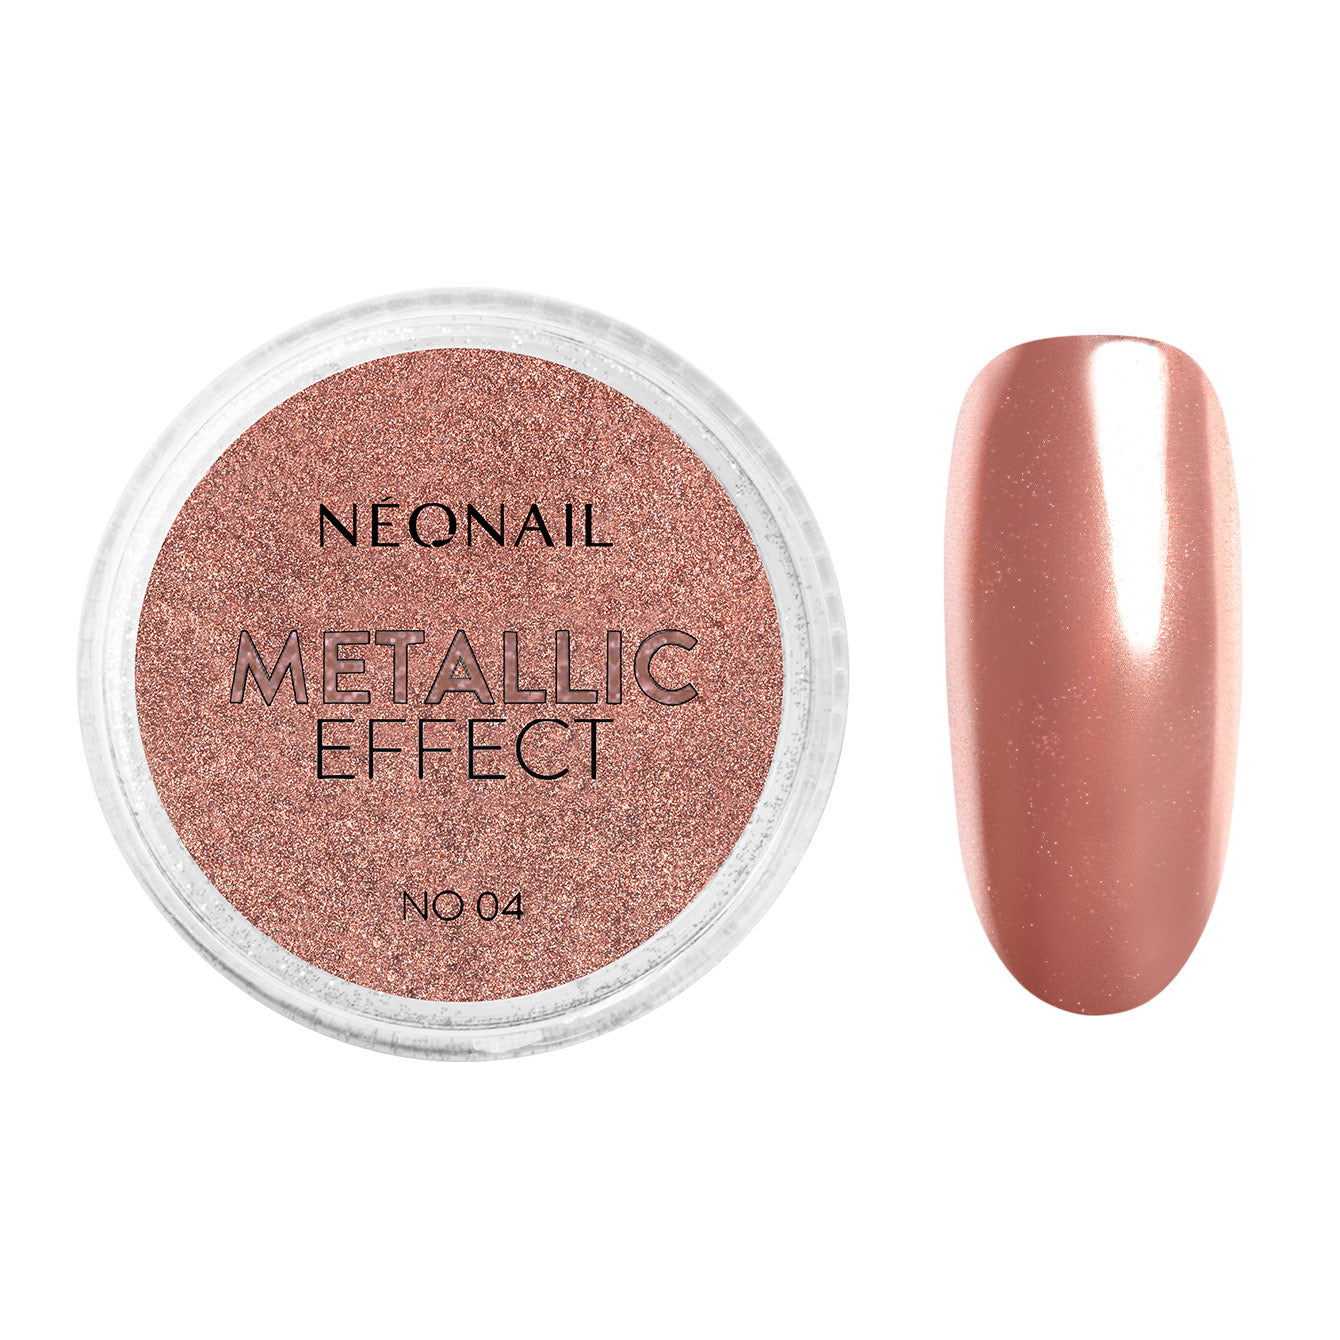 Neglepynt - Metallic Effect - 04-NeoNail-NR Kosmetik